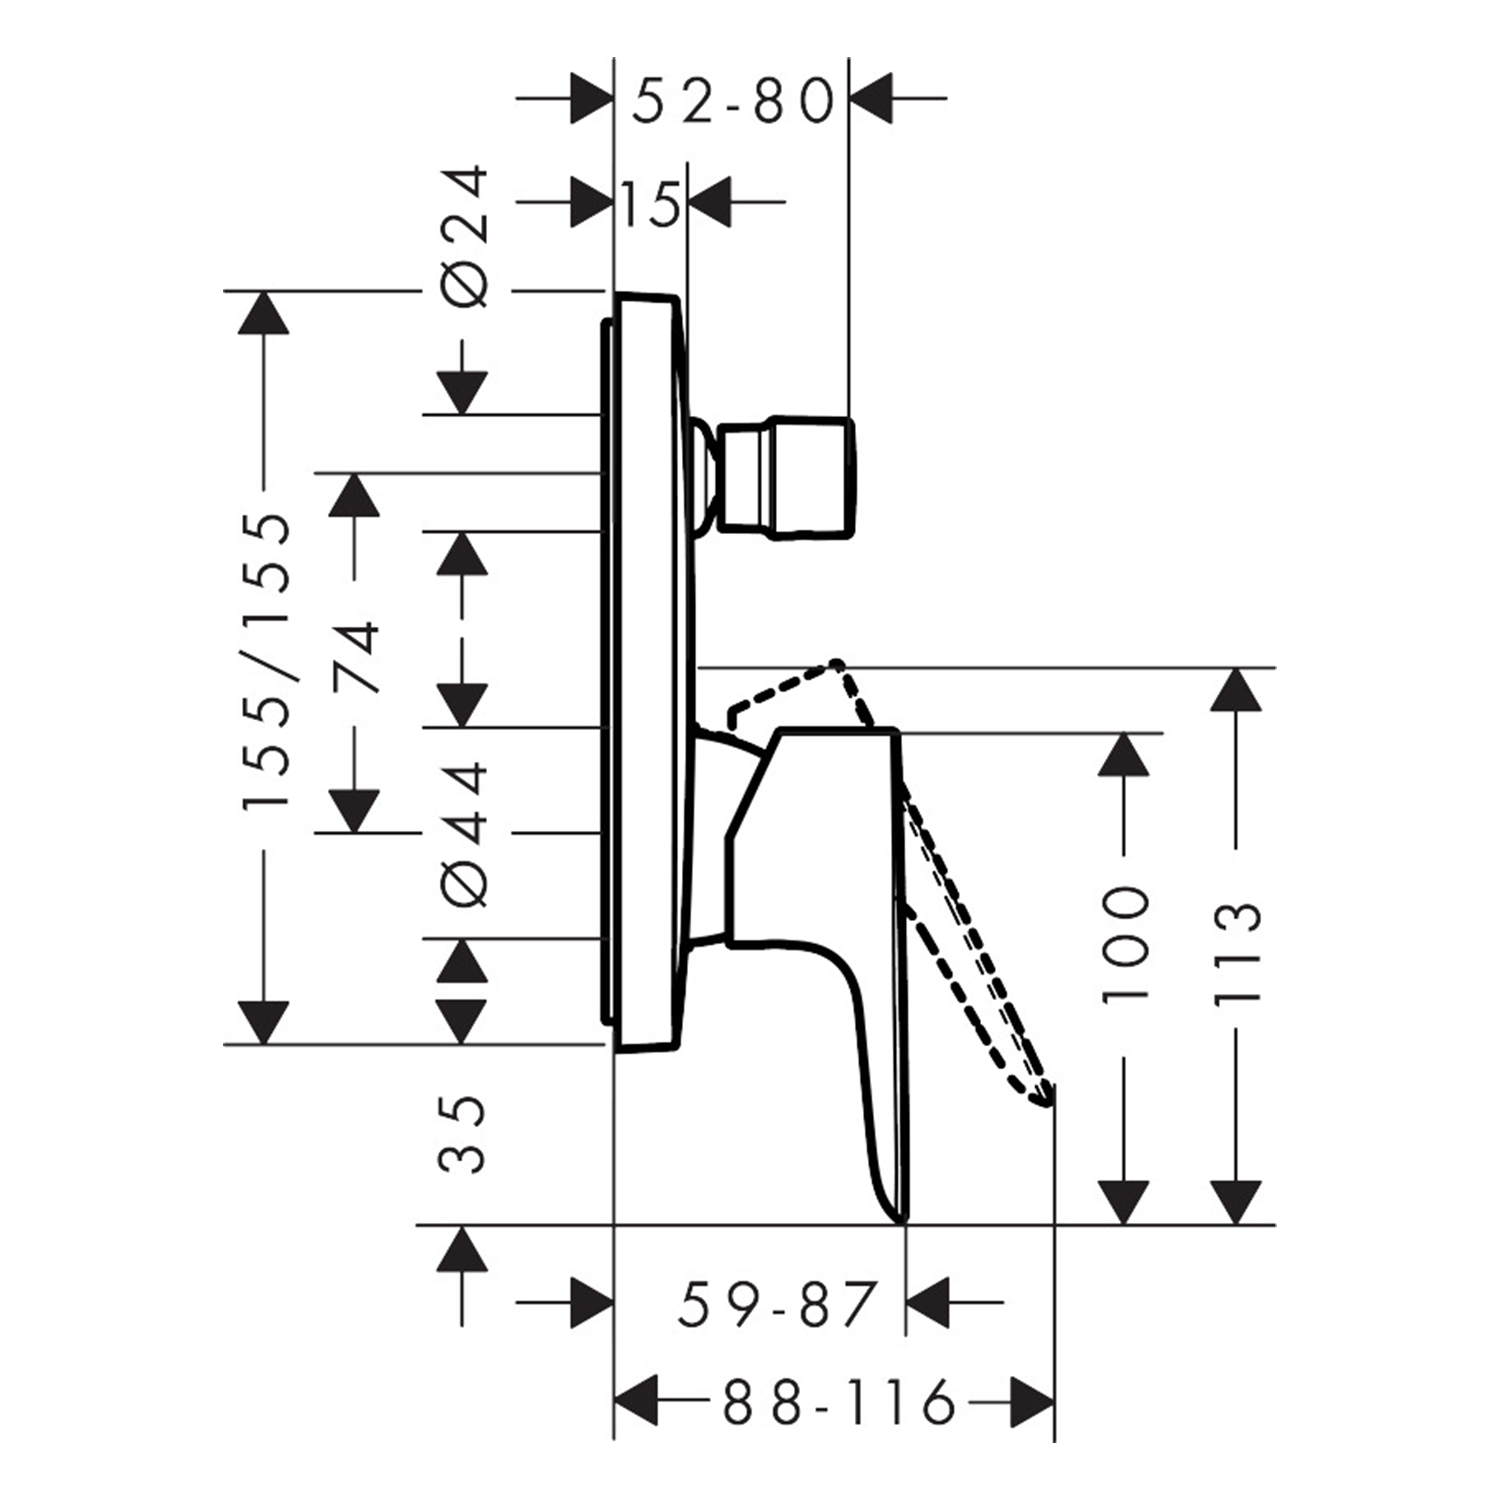 Talis E Single lever manual bath mixer technical